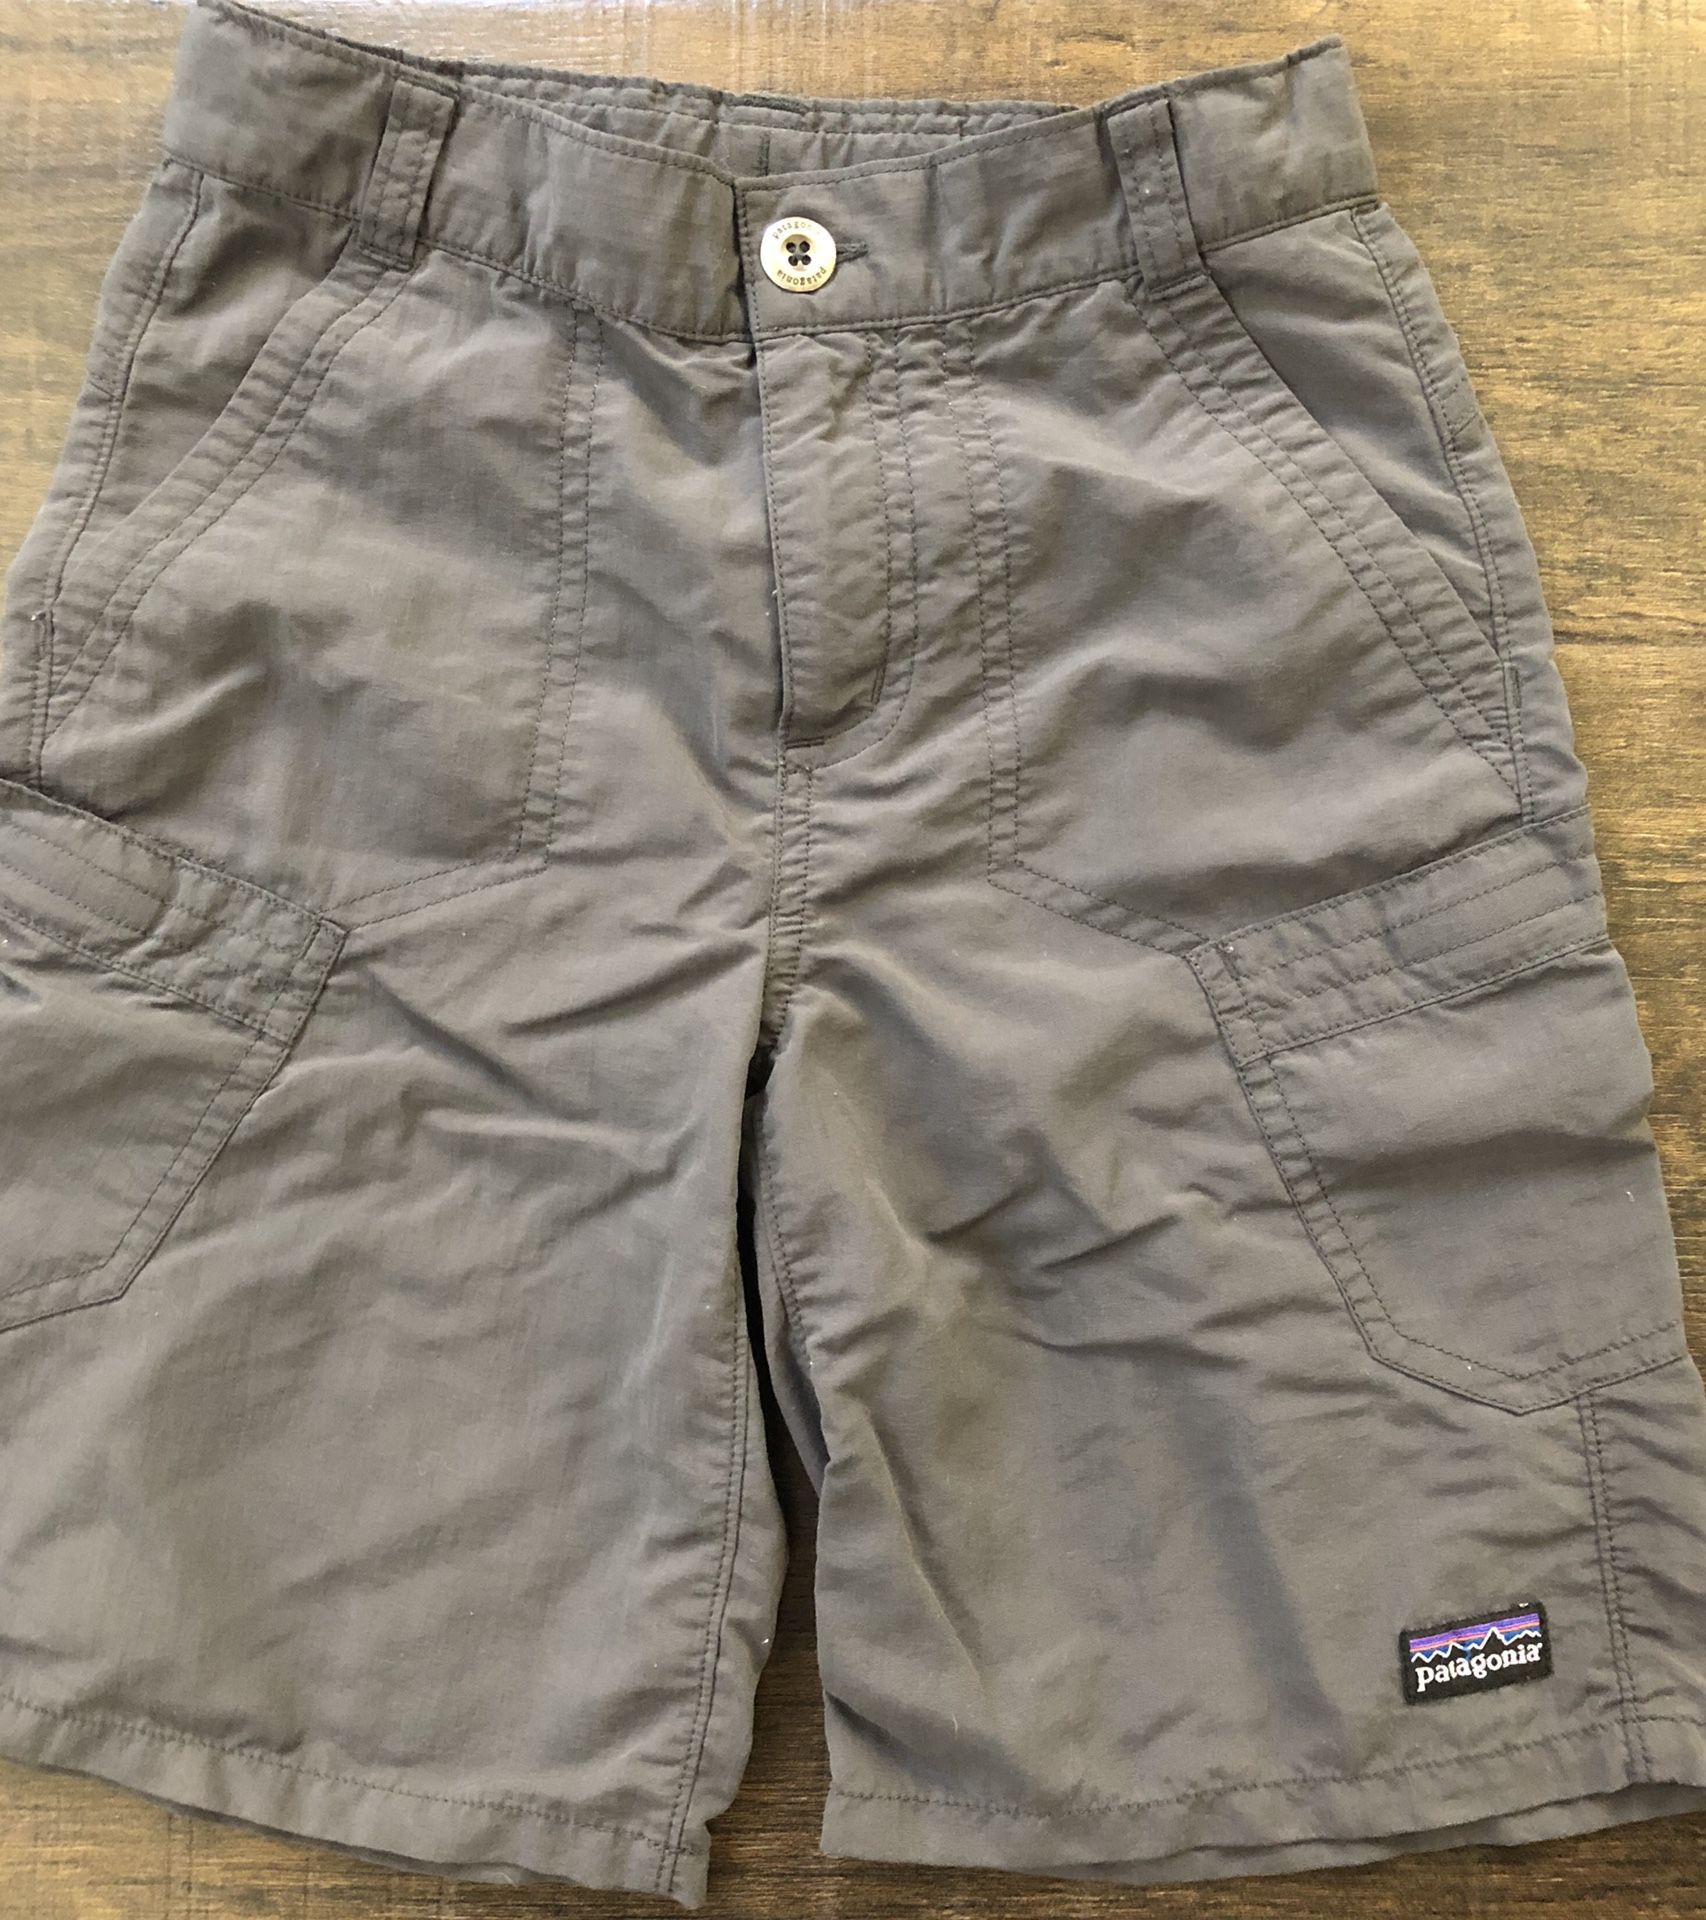 Patagonia boys nylon gray shorts size XS 5-6